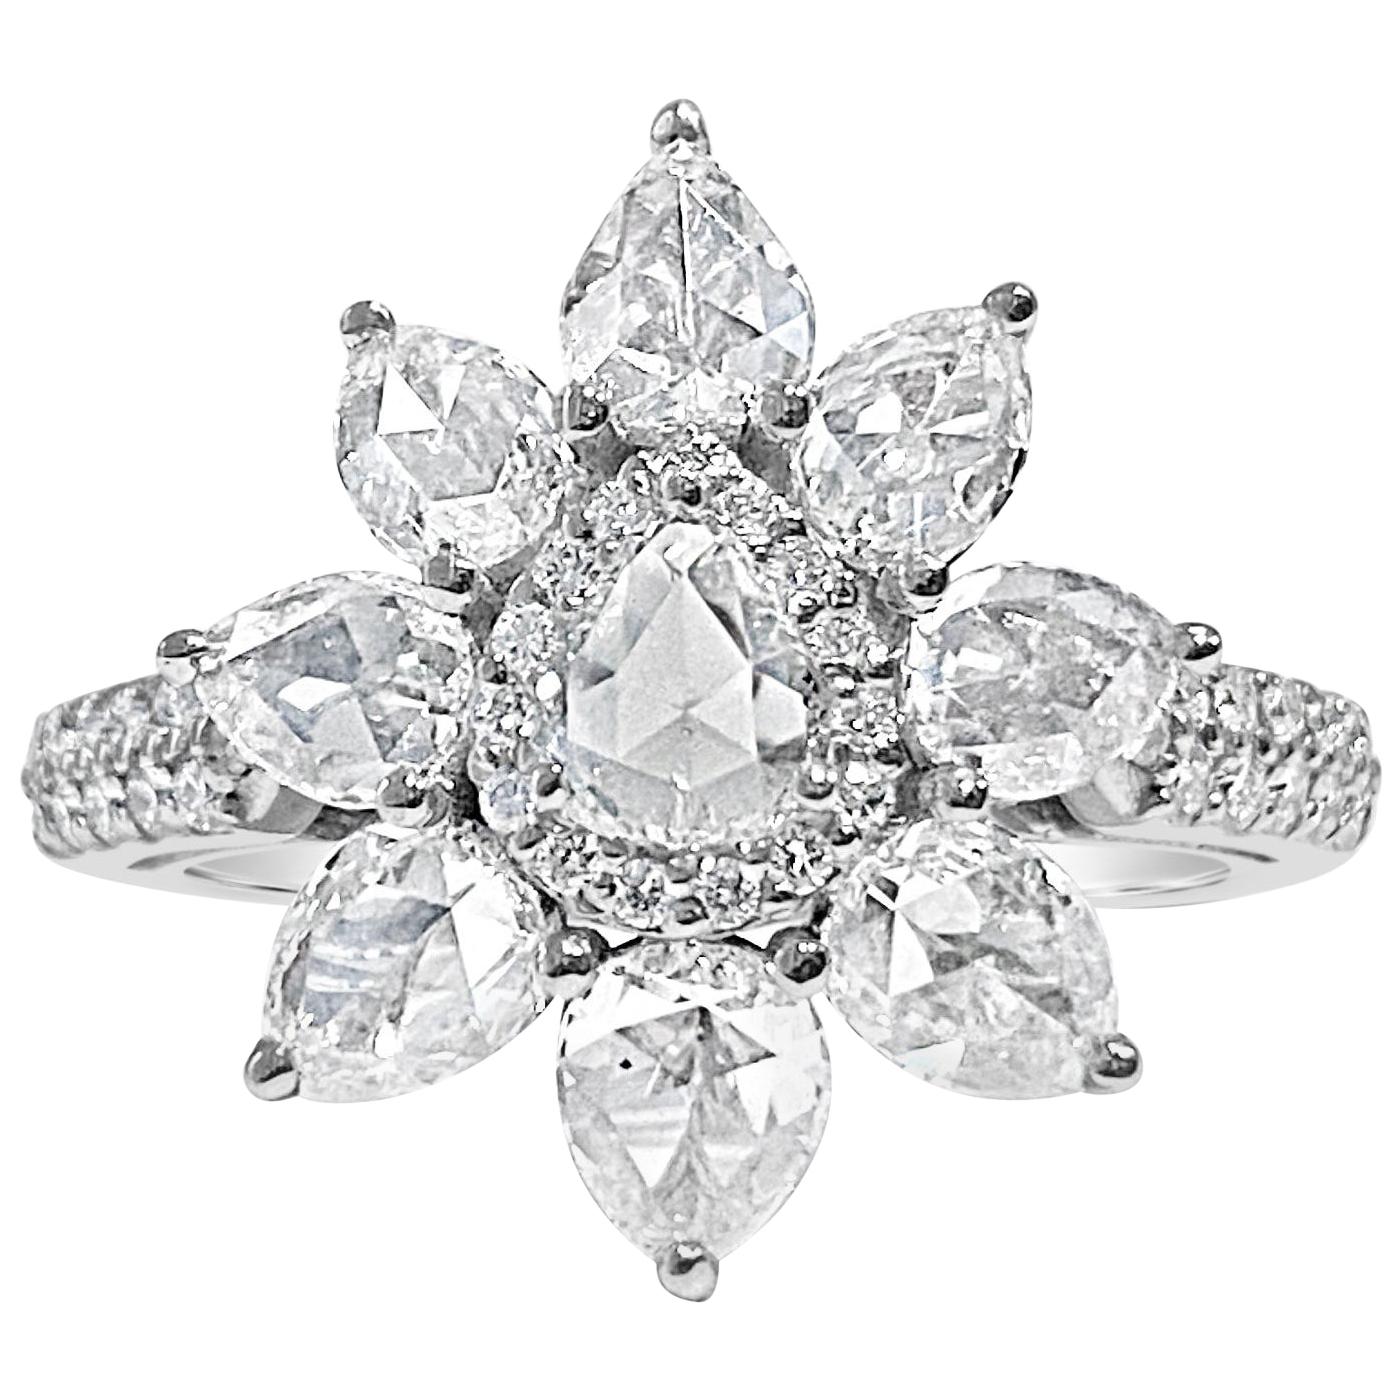 1.84 Carat Pear Shaped Rose Cut Diamond Ring with Round Brilliant Diamonds, 18K